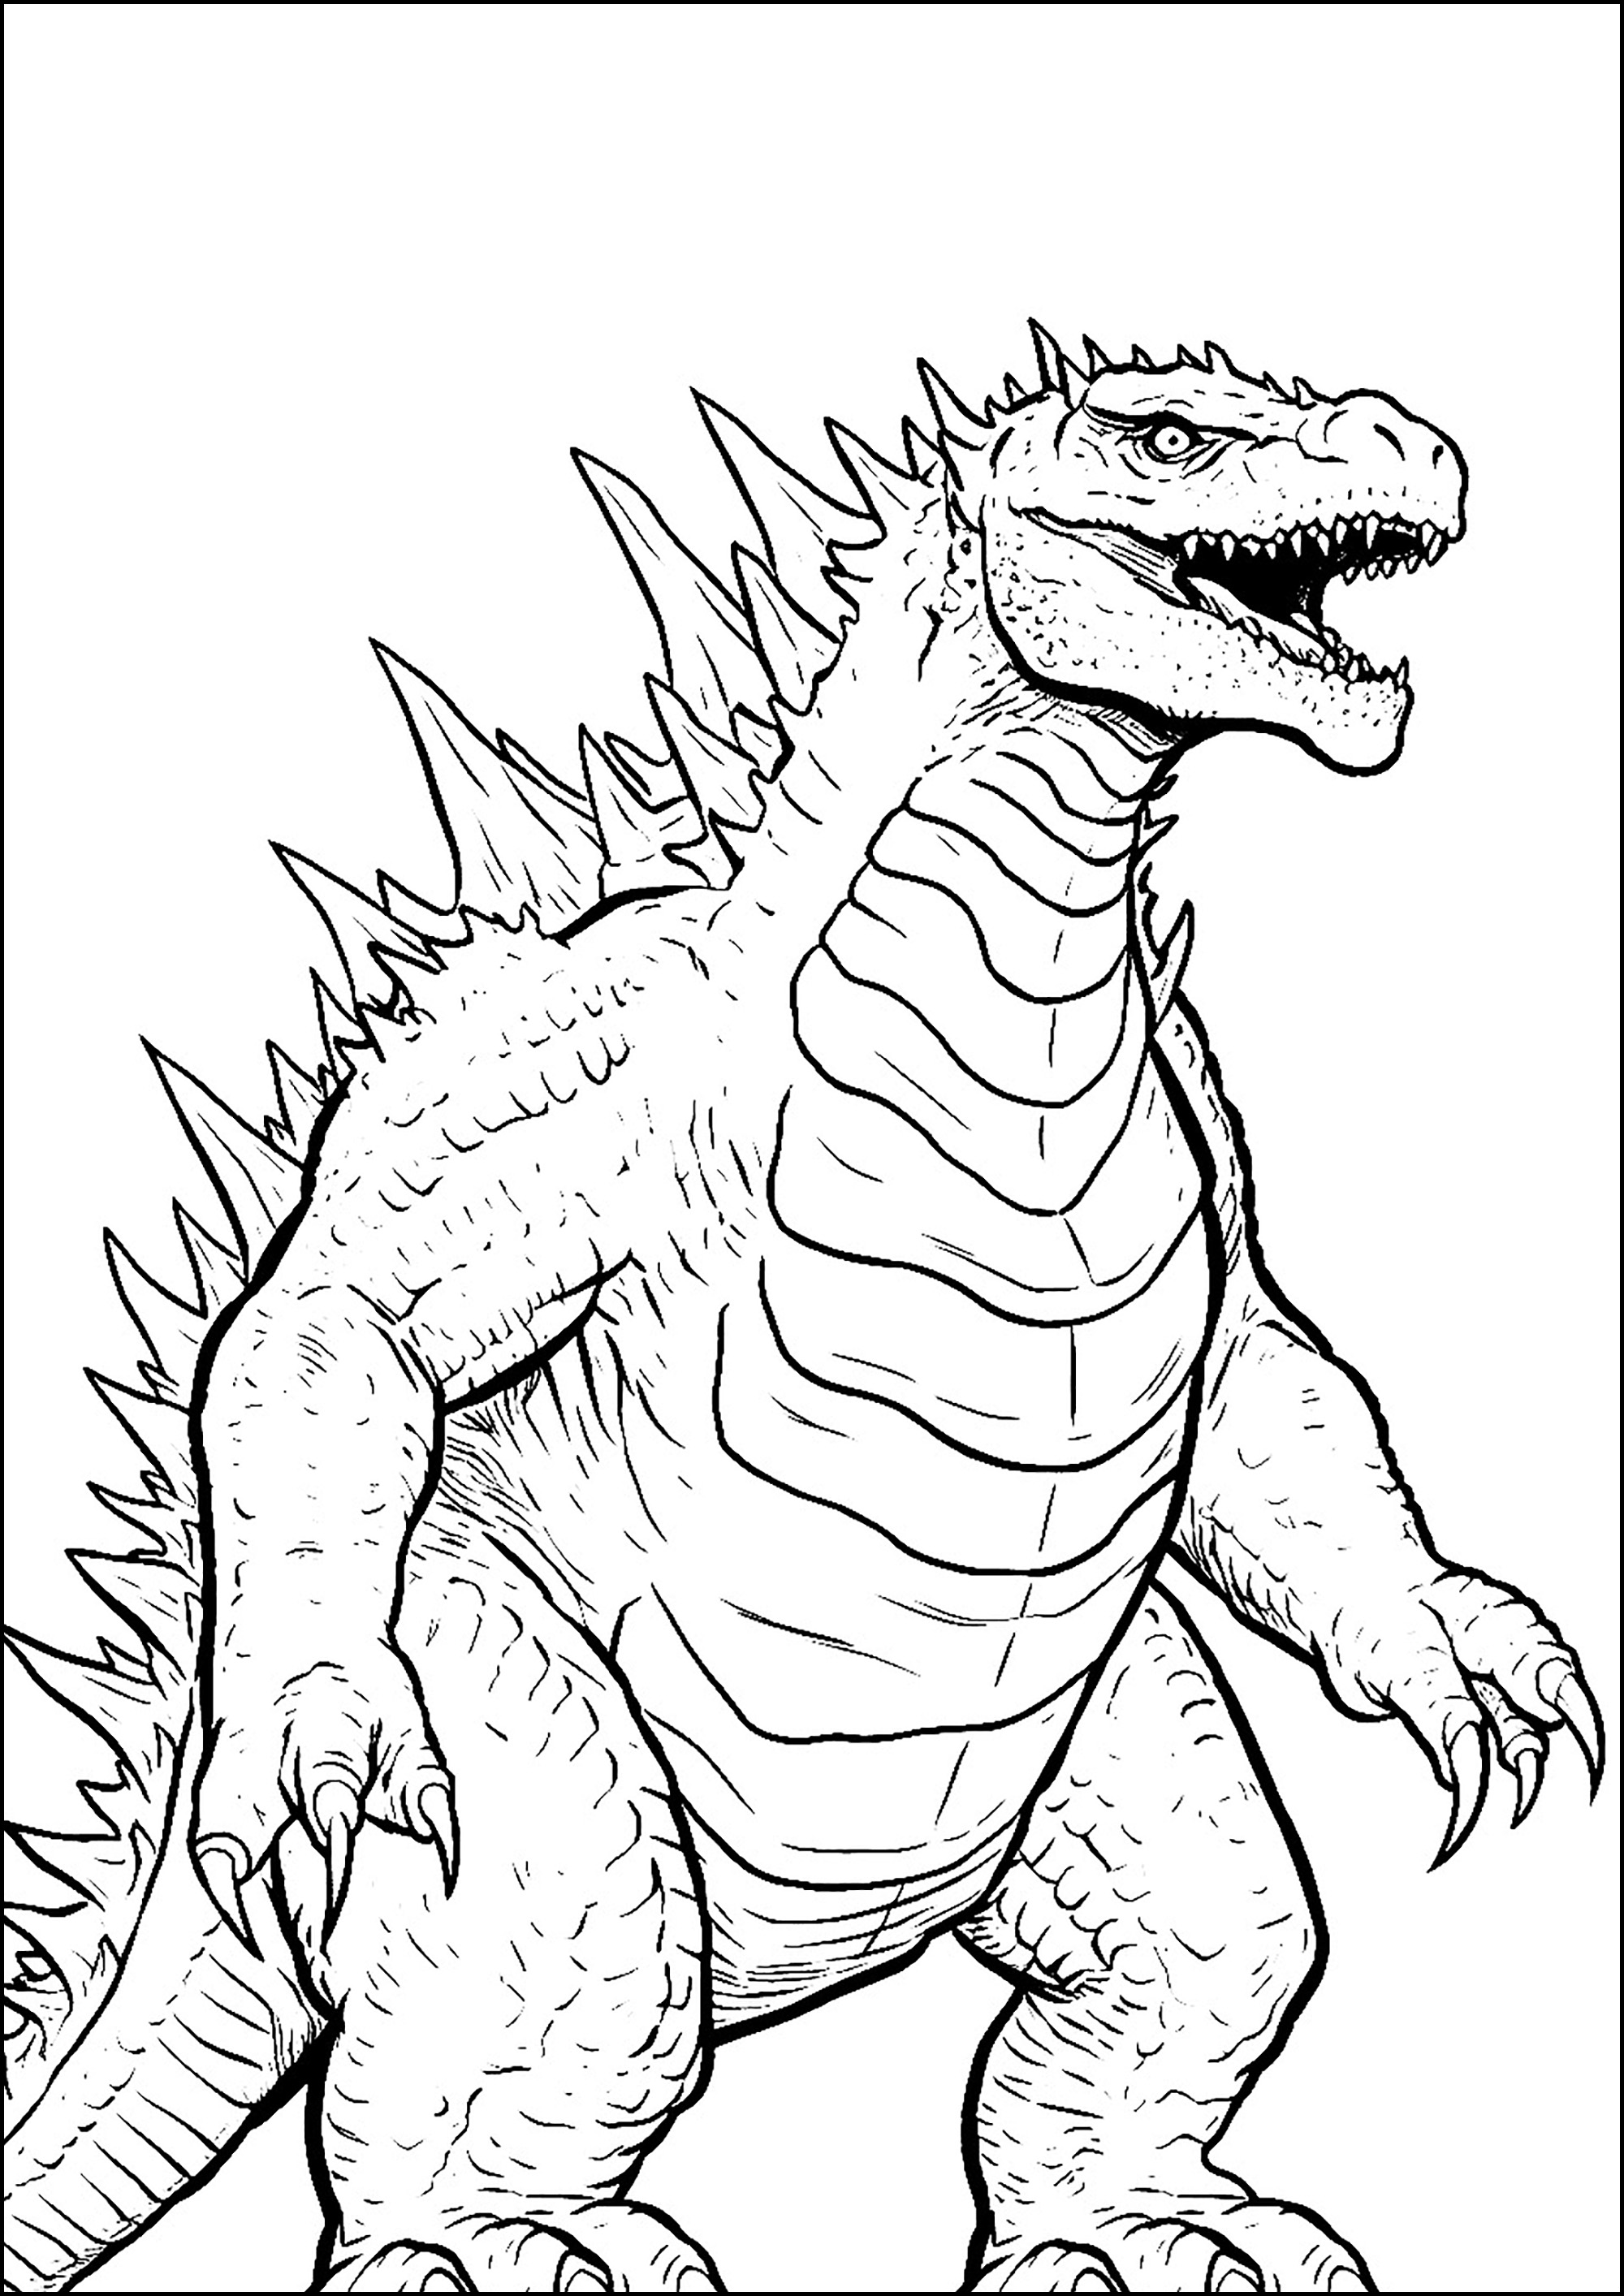 Precioso libro para colorear de Godzilla